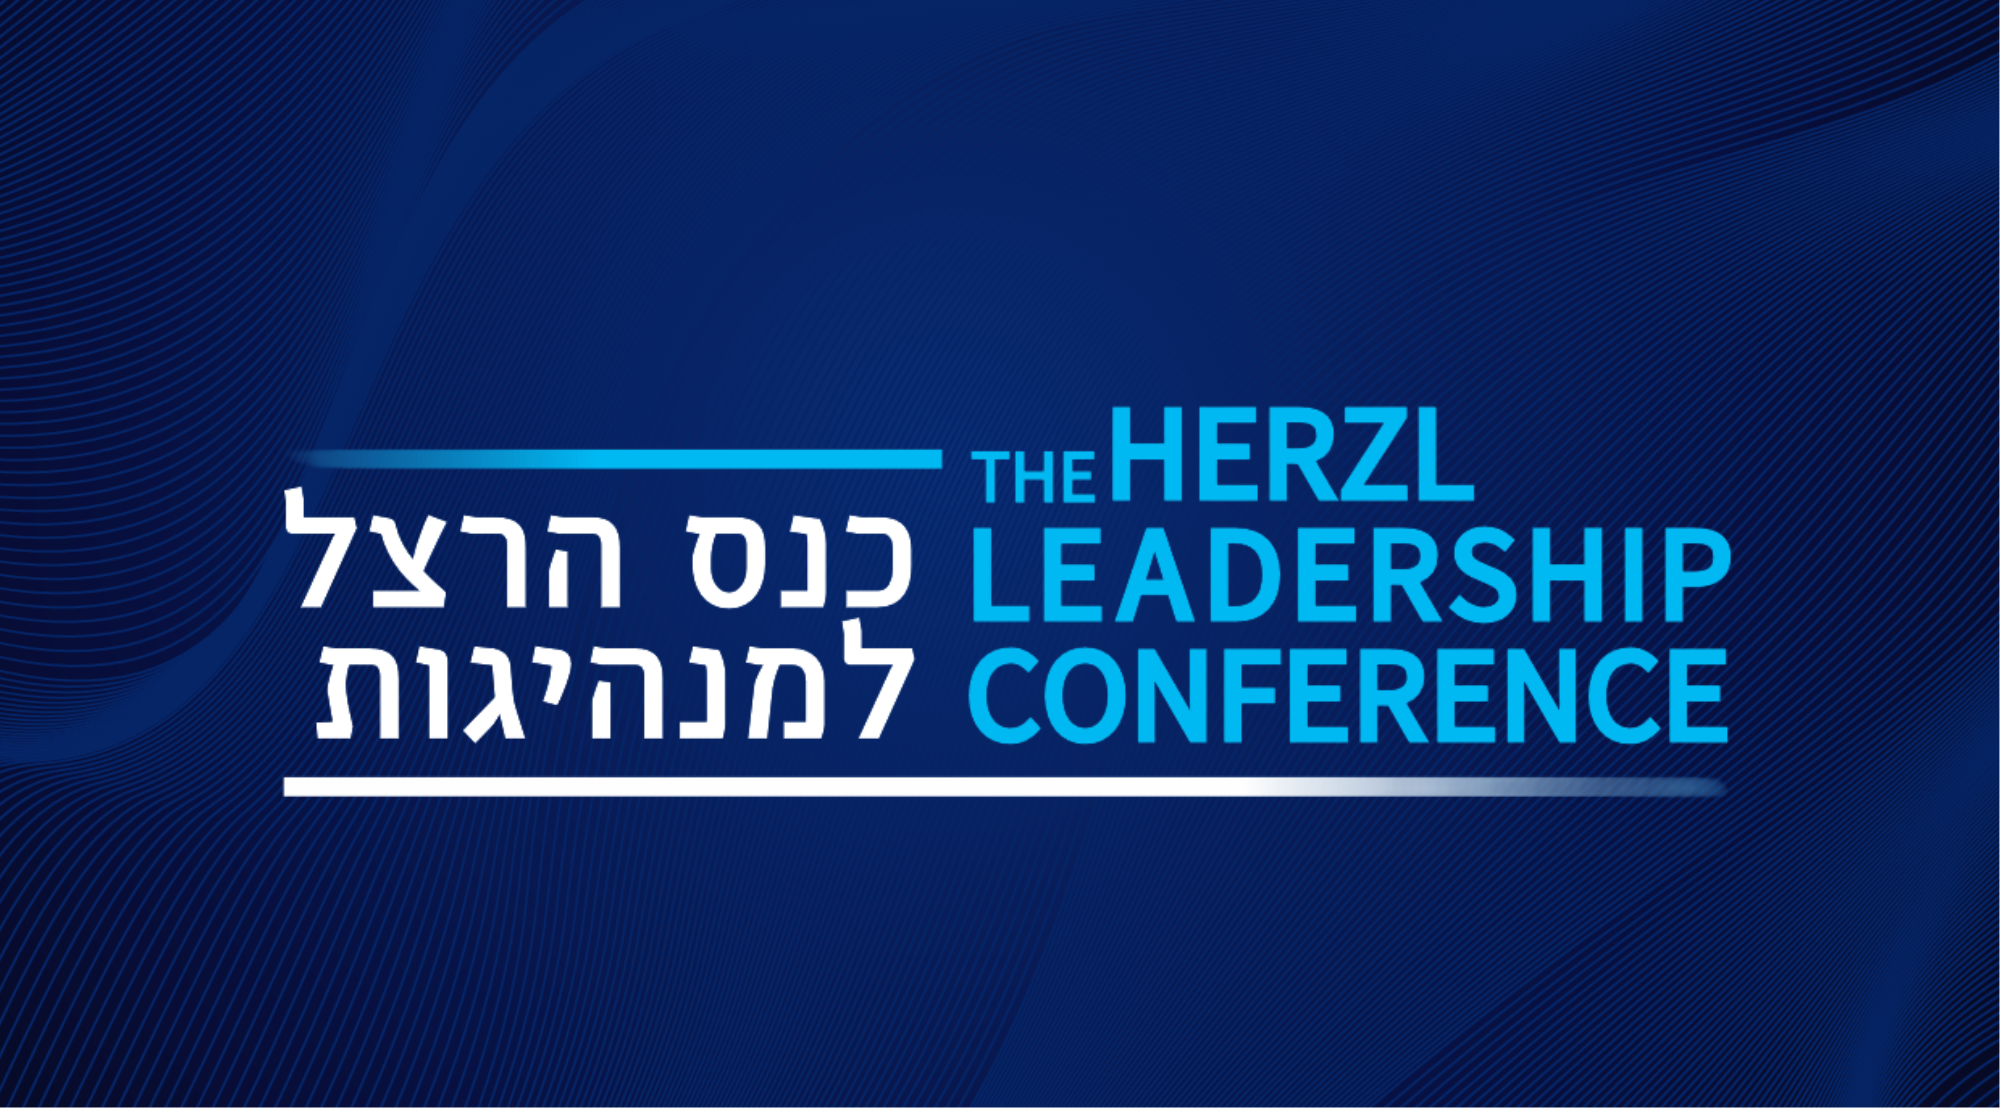 Leadership conference banner